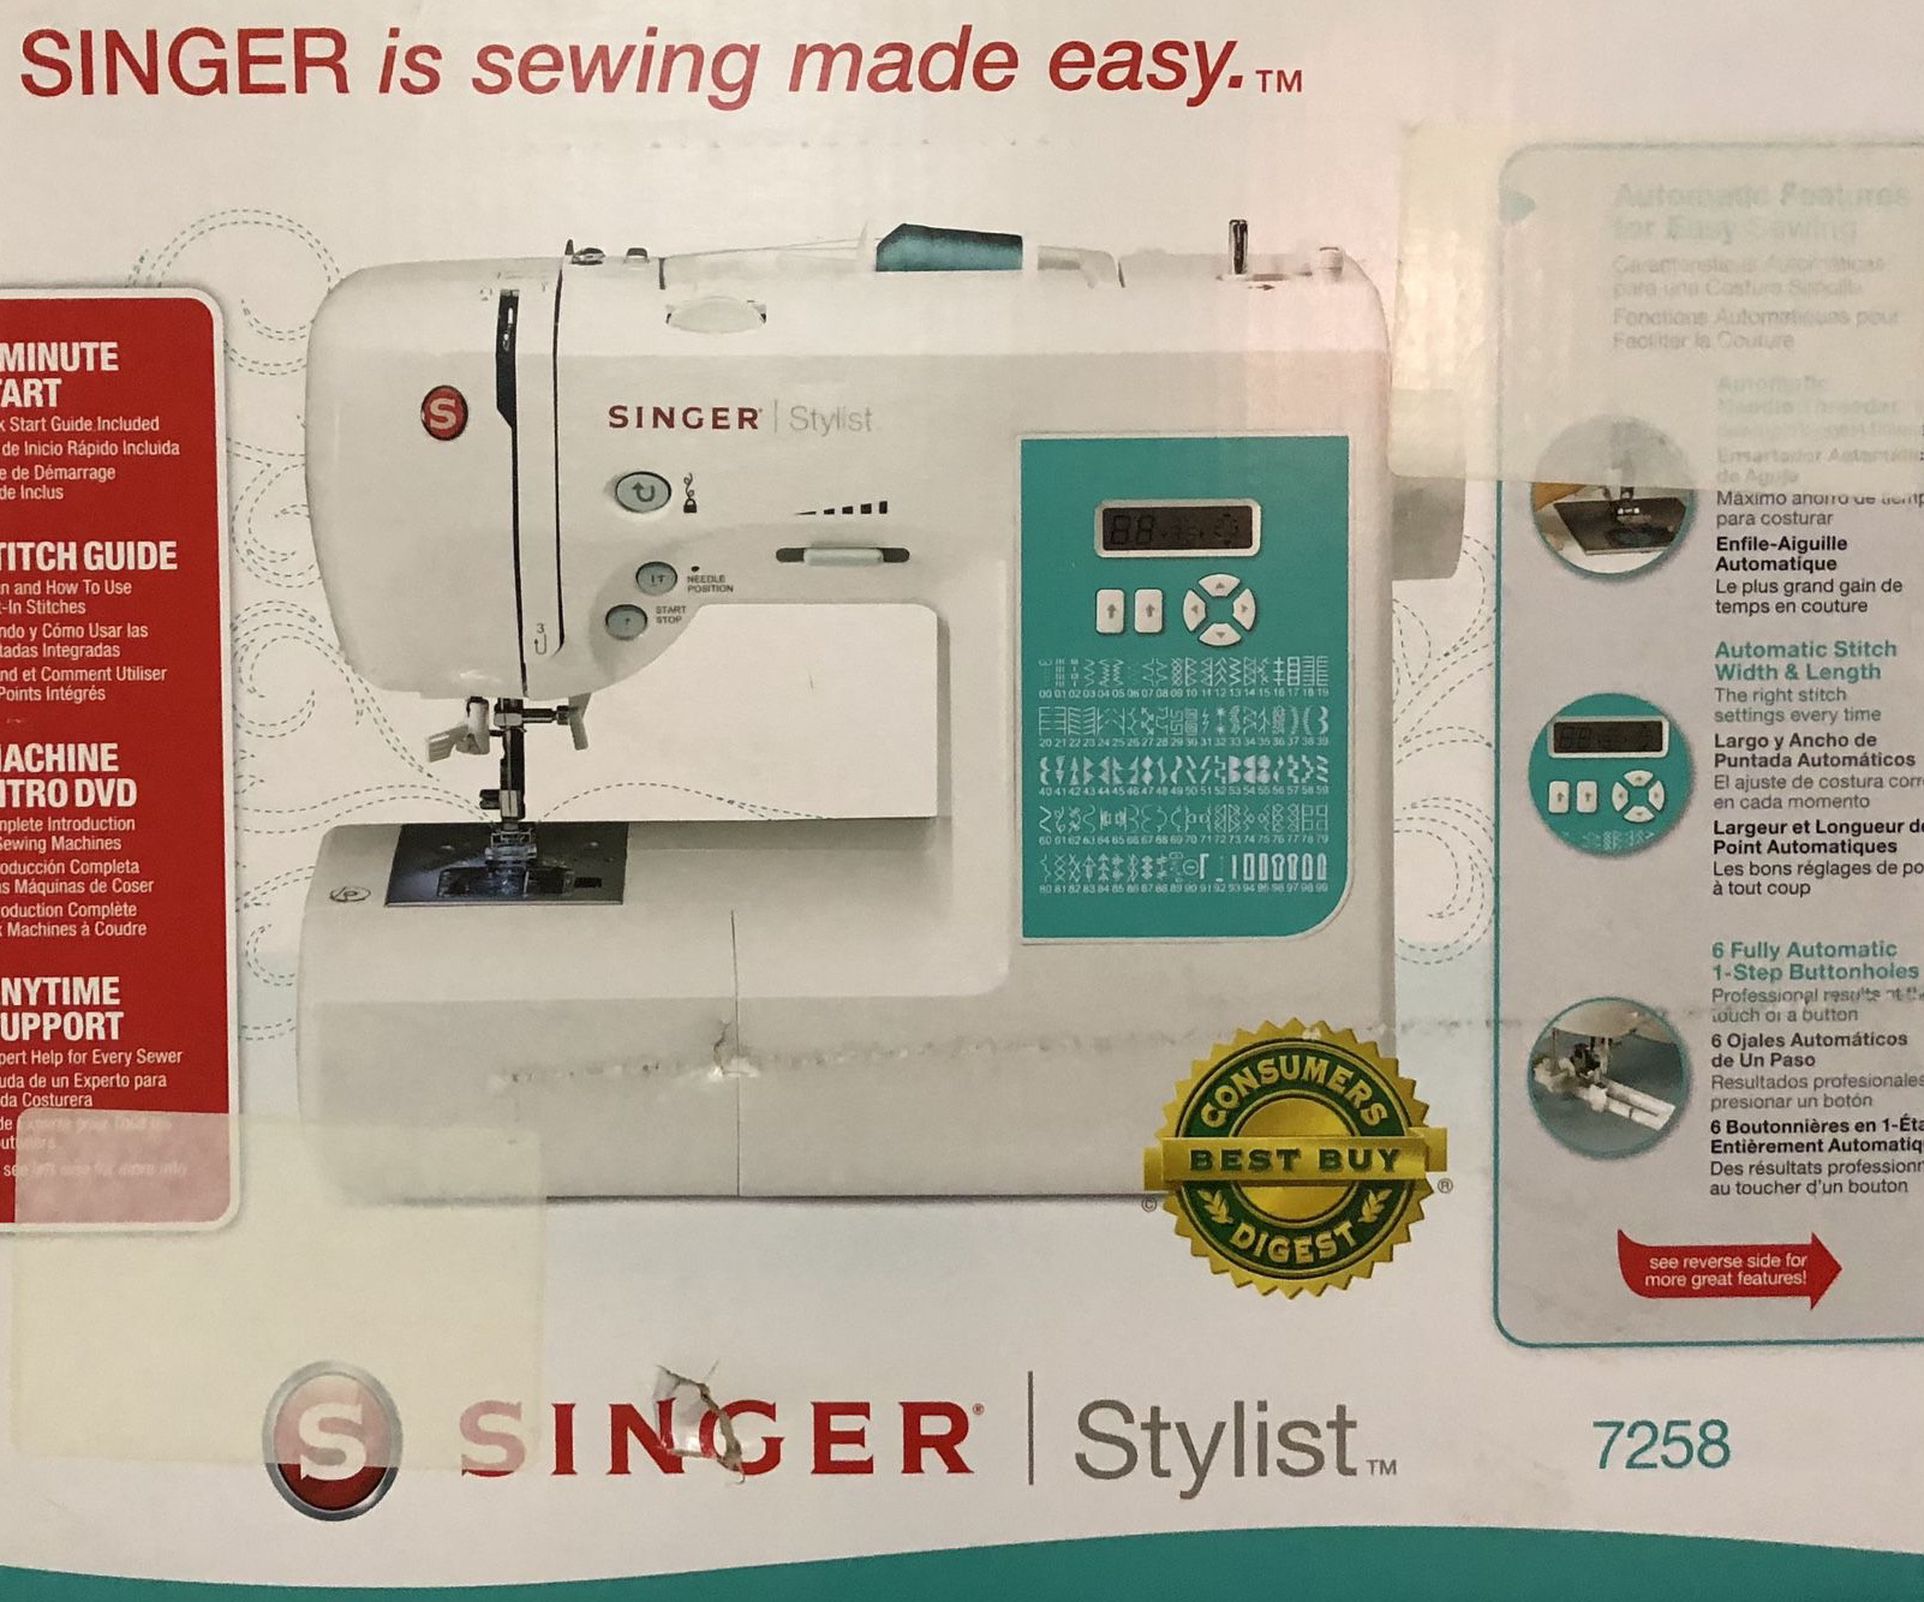 Singer Talent 7258 Sewing Machine